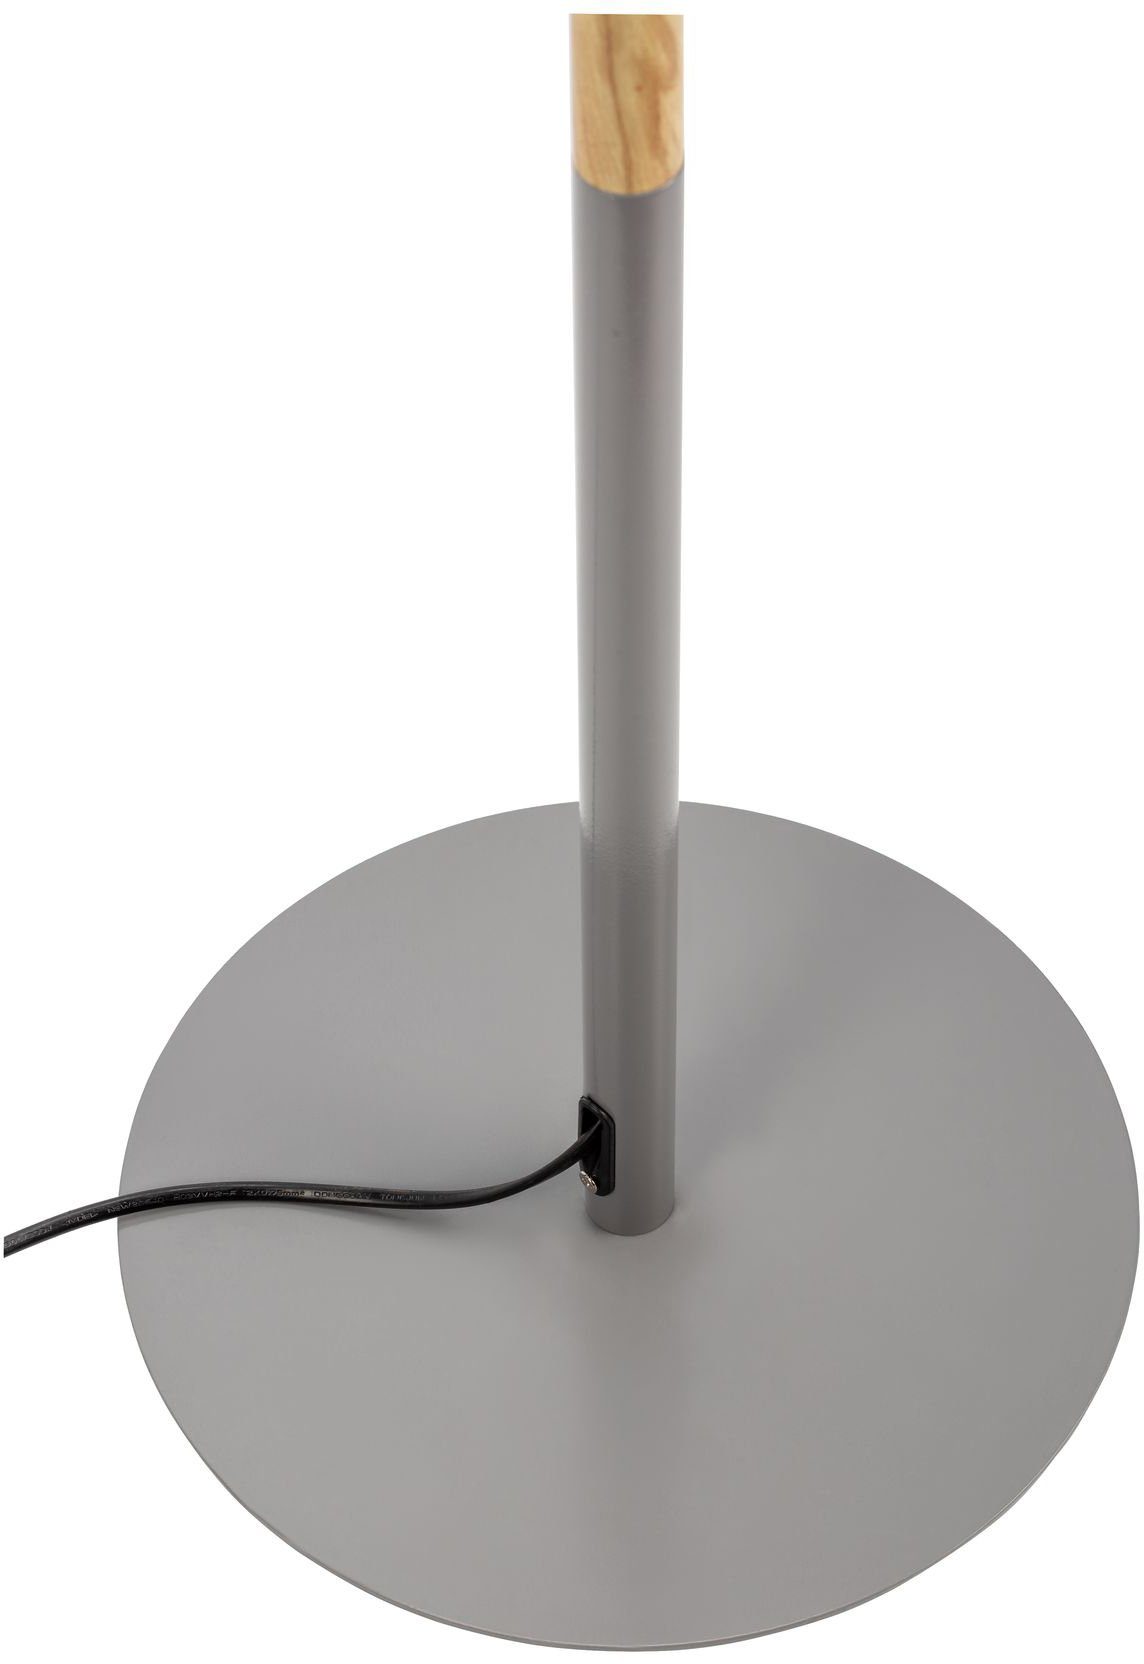 Pauleen Stehlampe Grand Purity, max. 20W Stoff/Metall ohne Leuchtmittel, Grau/Holzoptik, E27, 230V, E27